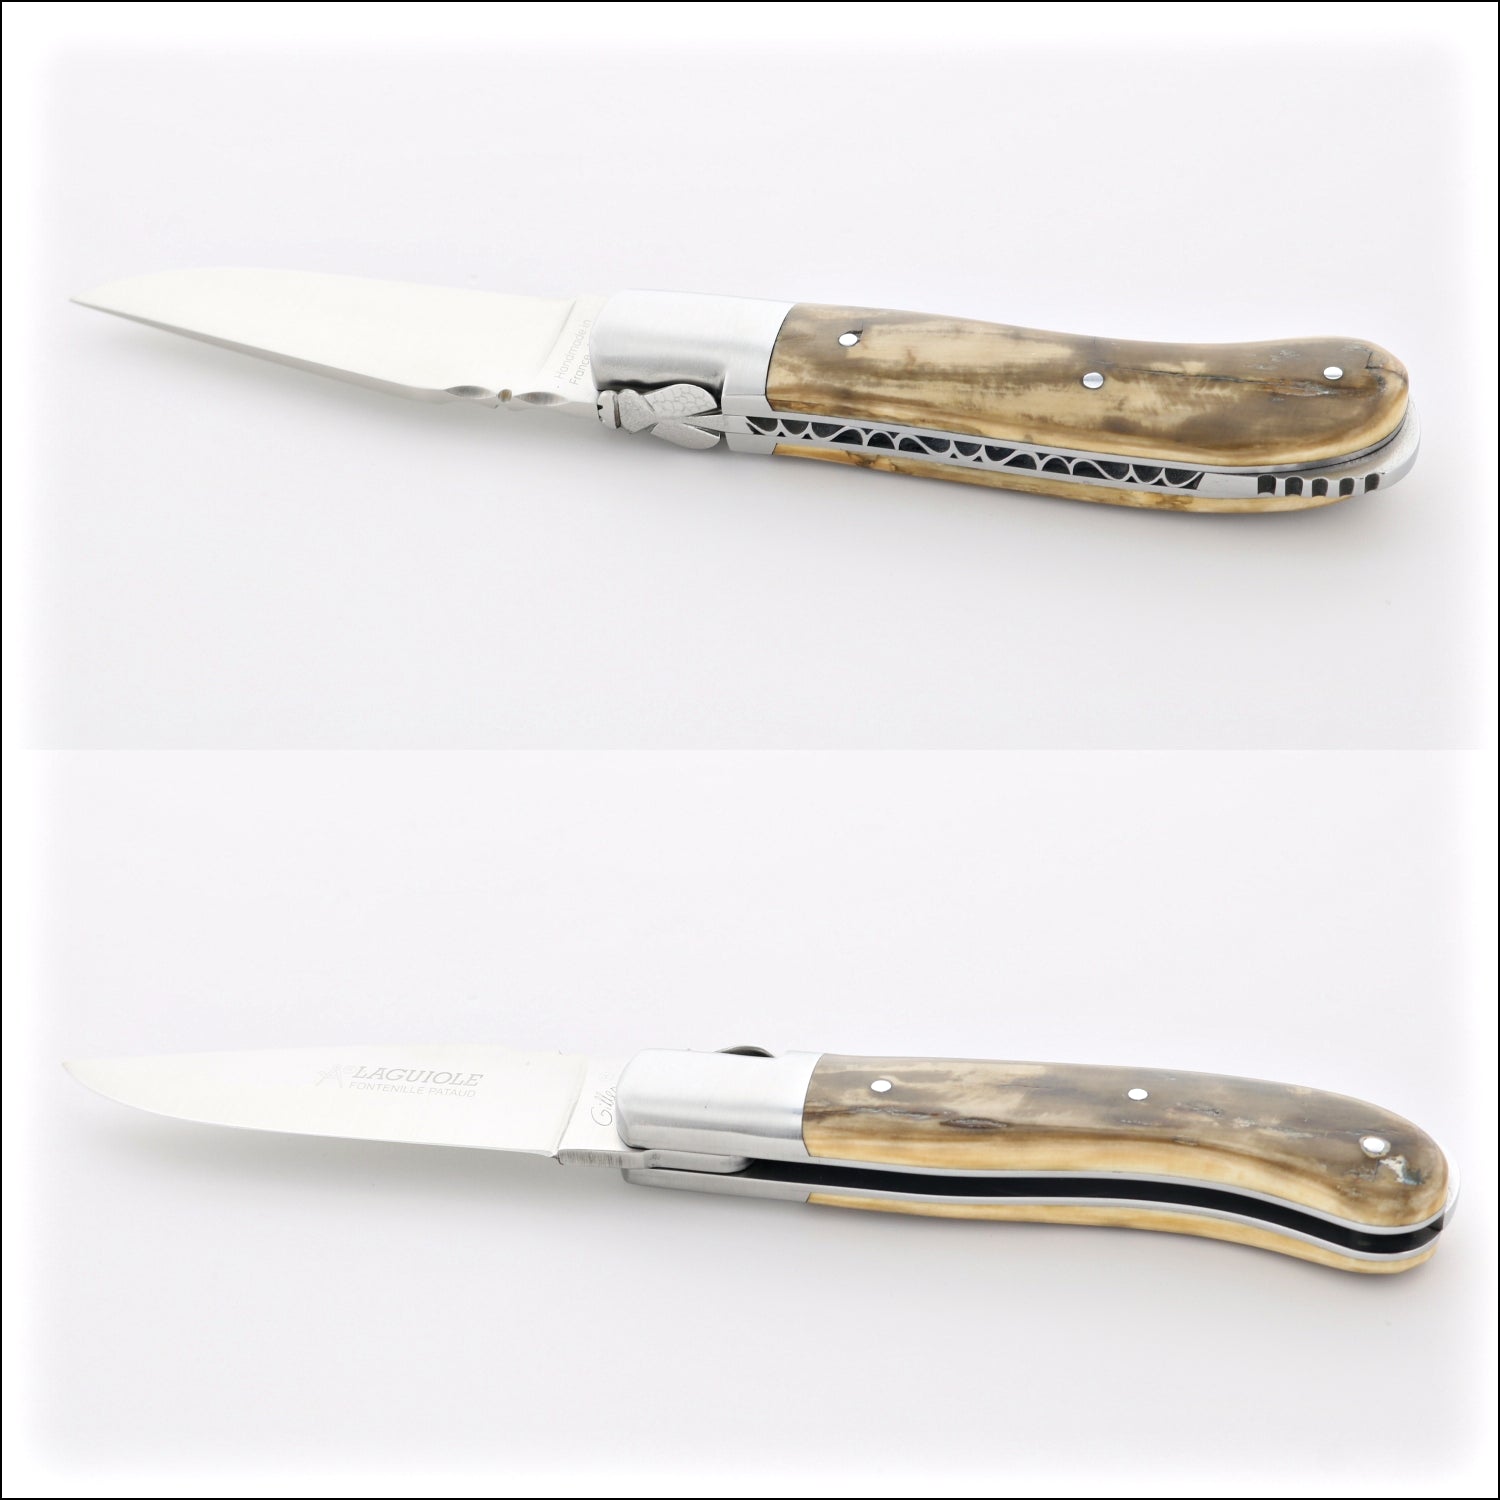 Laguiole Gentleman's Knife - Mammoth Ivory